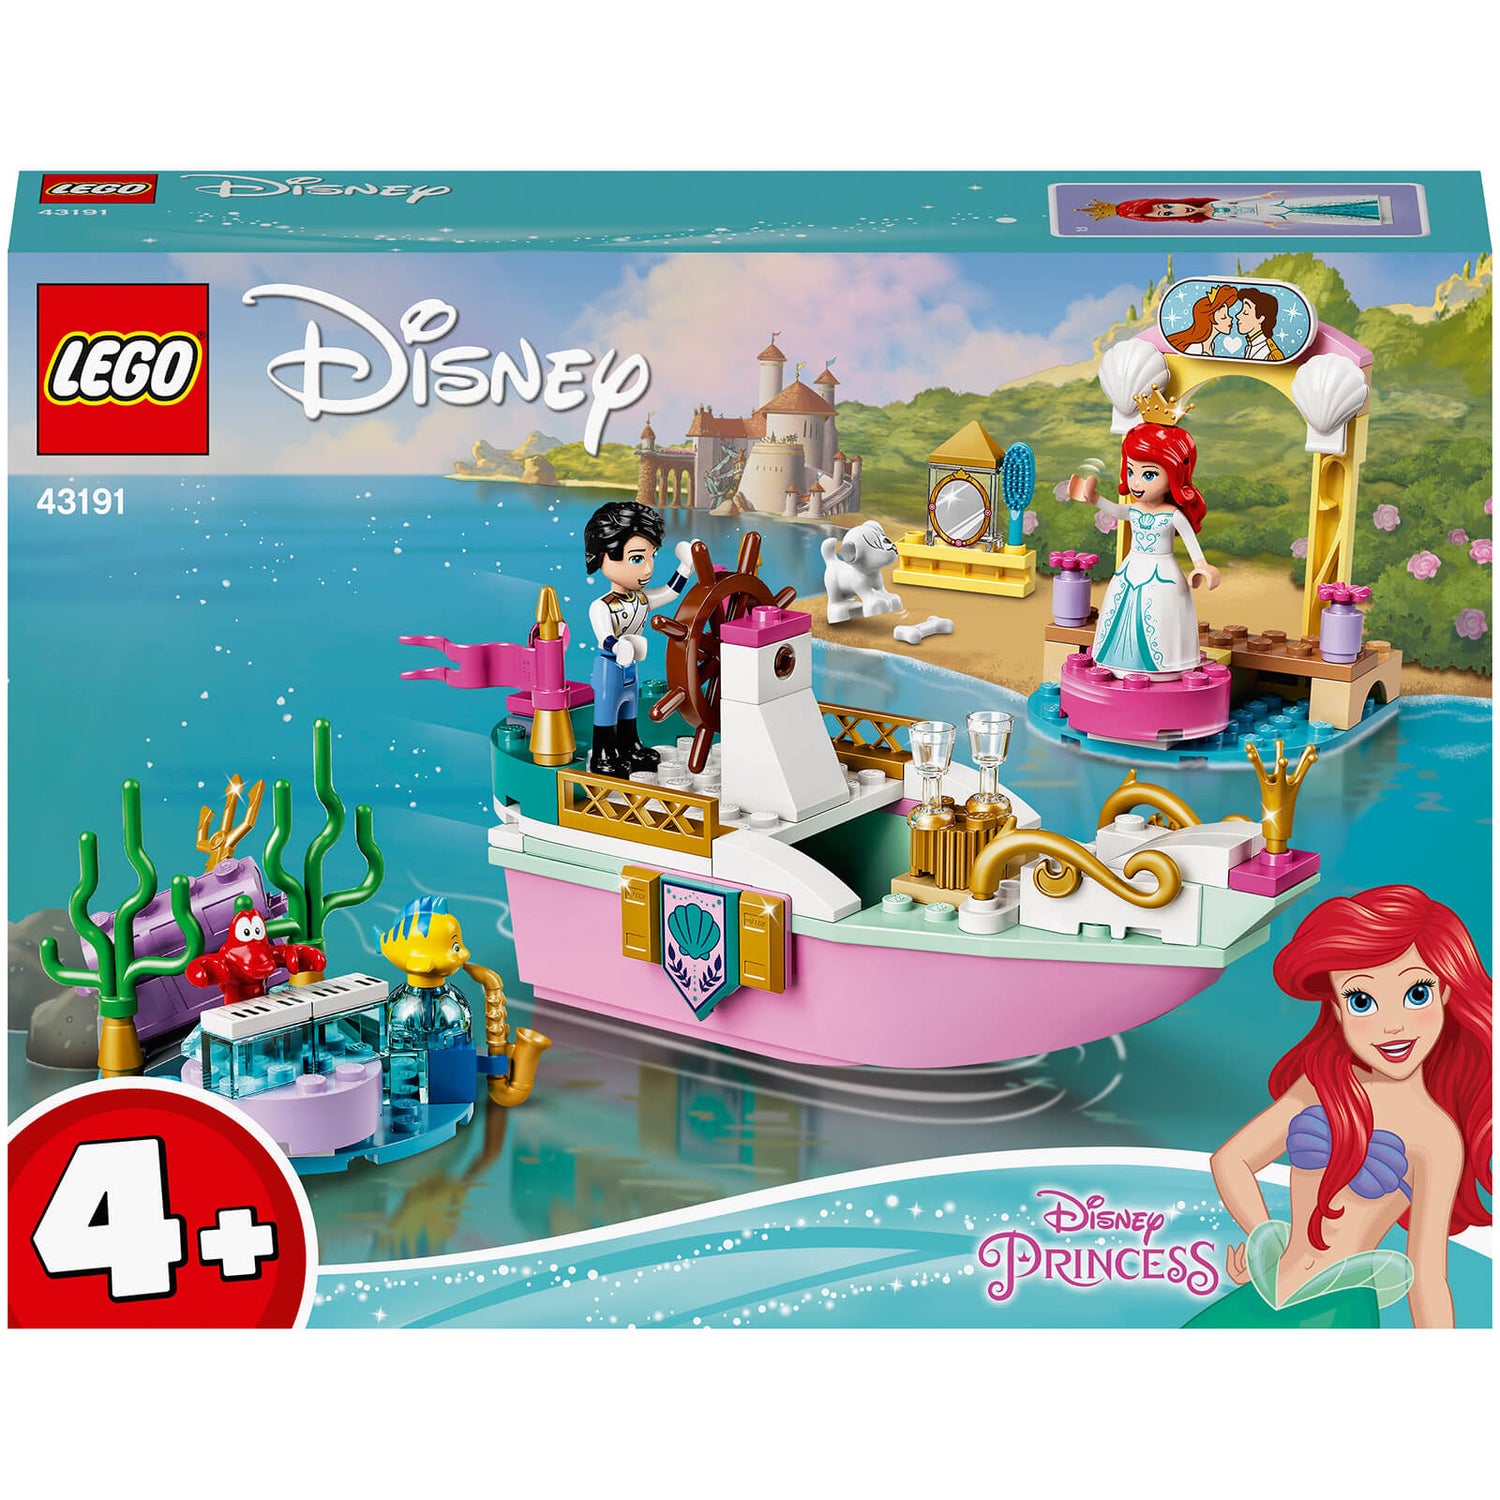 LEGO Disney Princess: Ariel’s Celebration Boat Toy (43191)